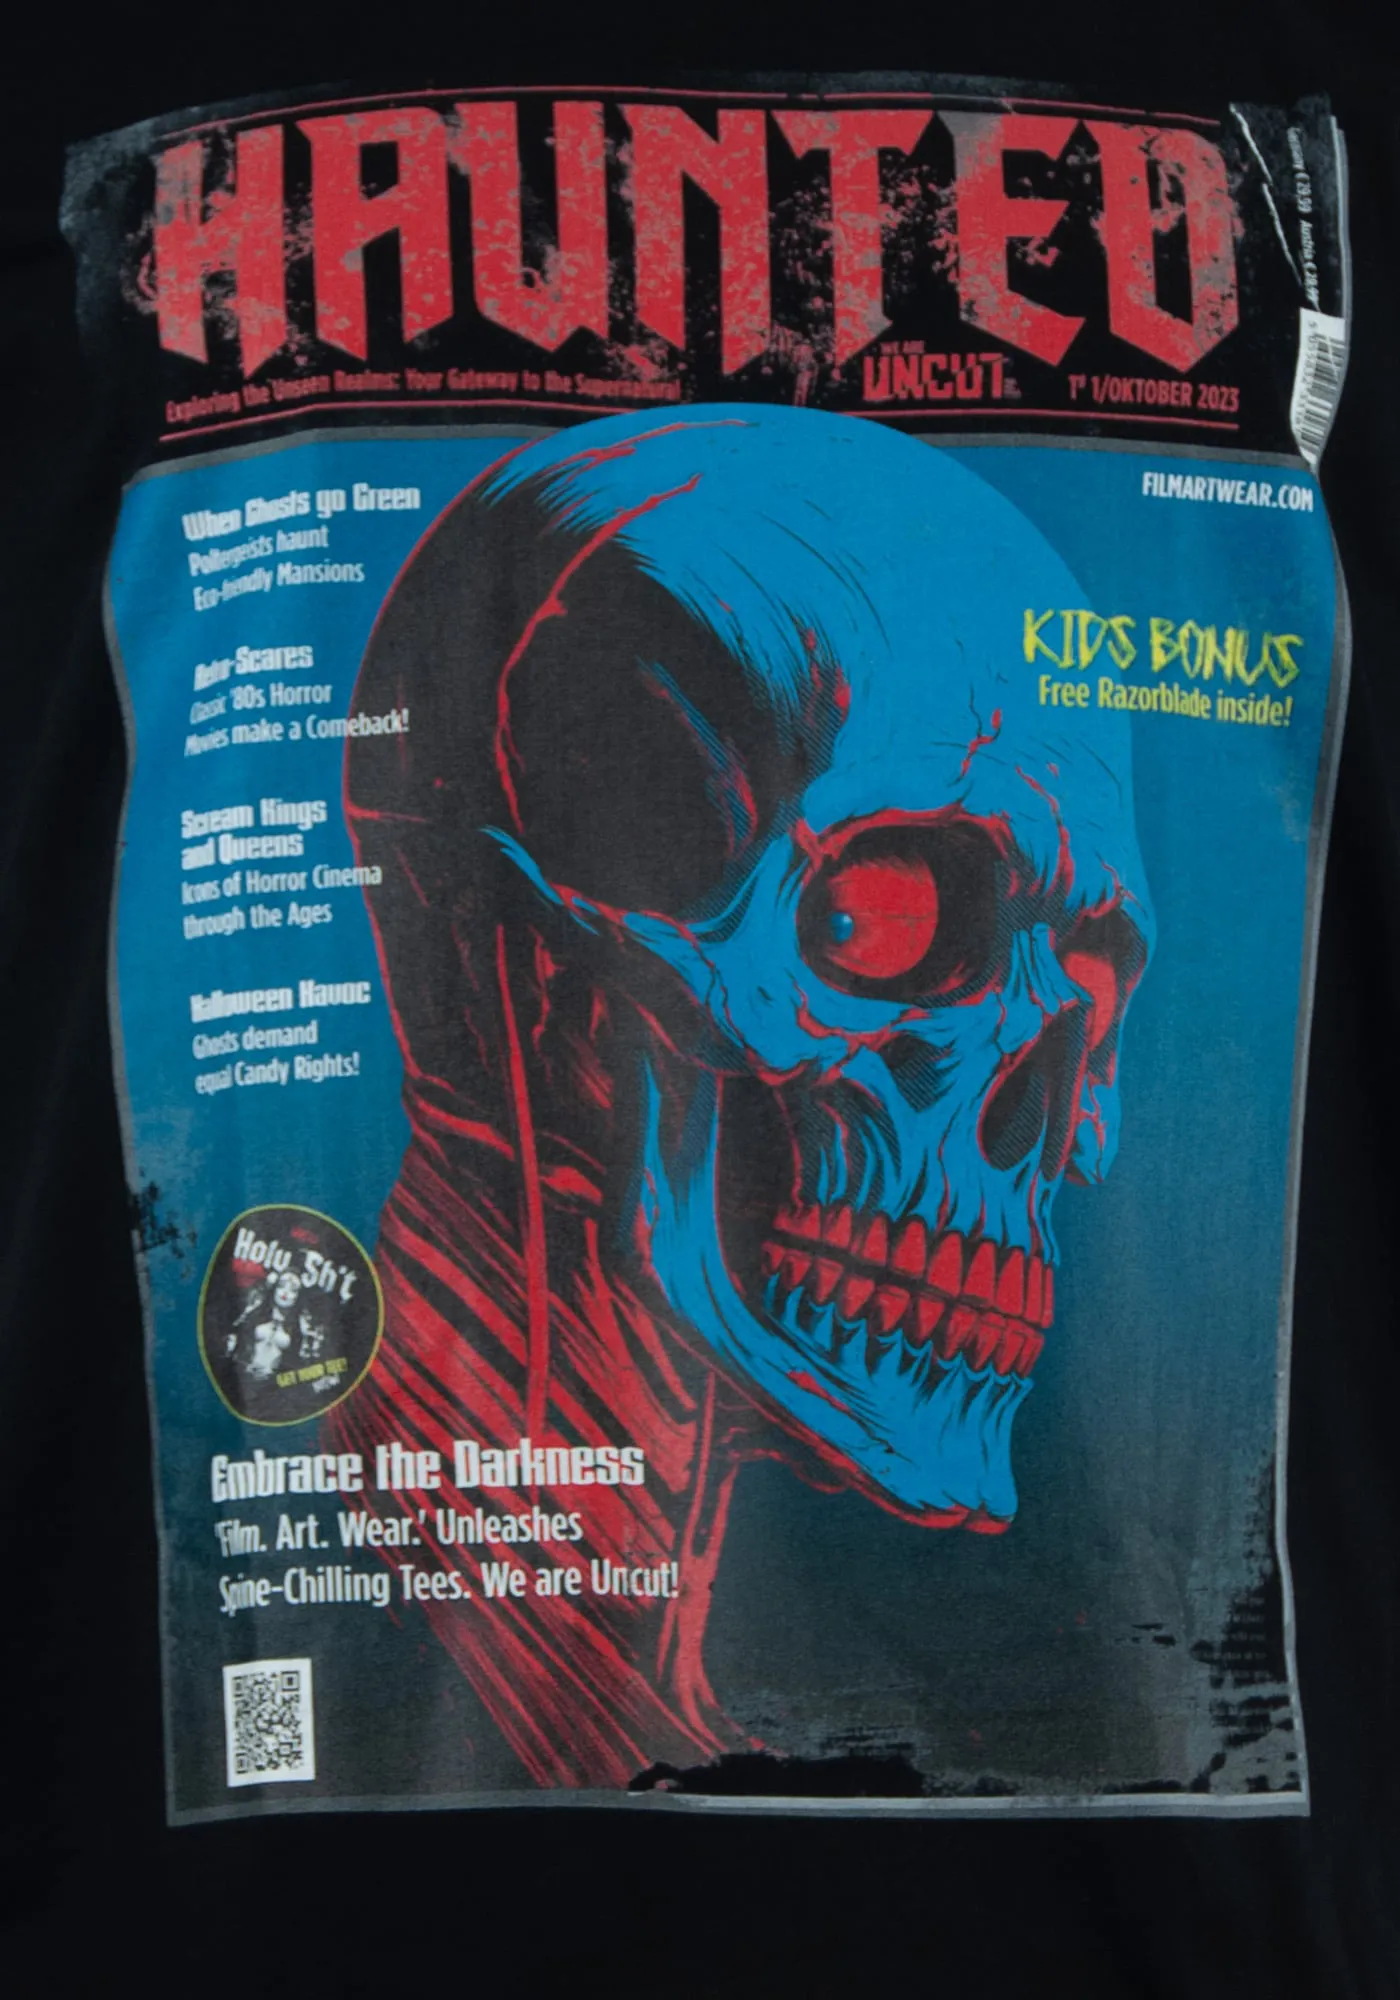 Closeup gruselshirts T-Shirt Frontprint des Haunted Magazin Covers